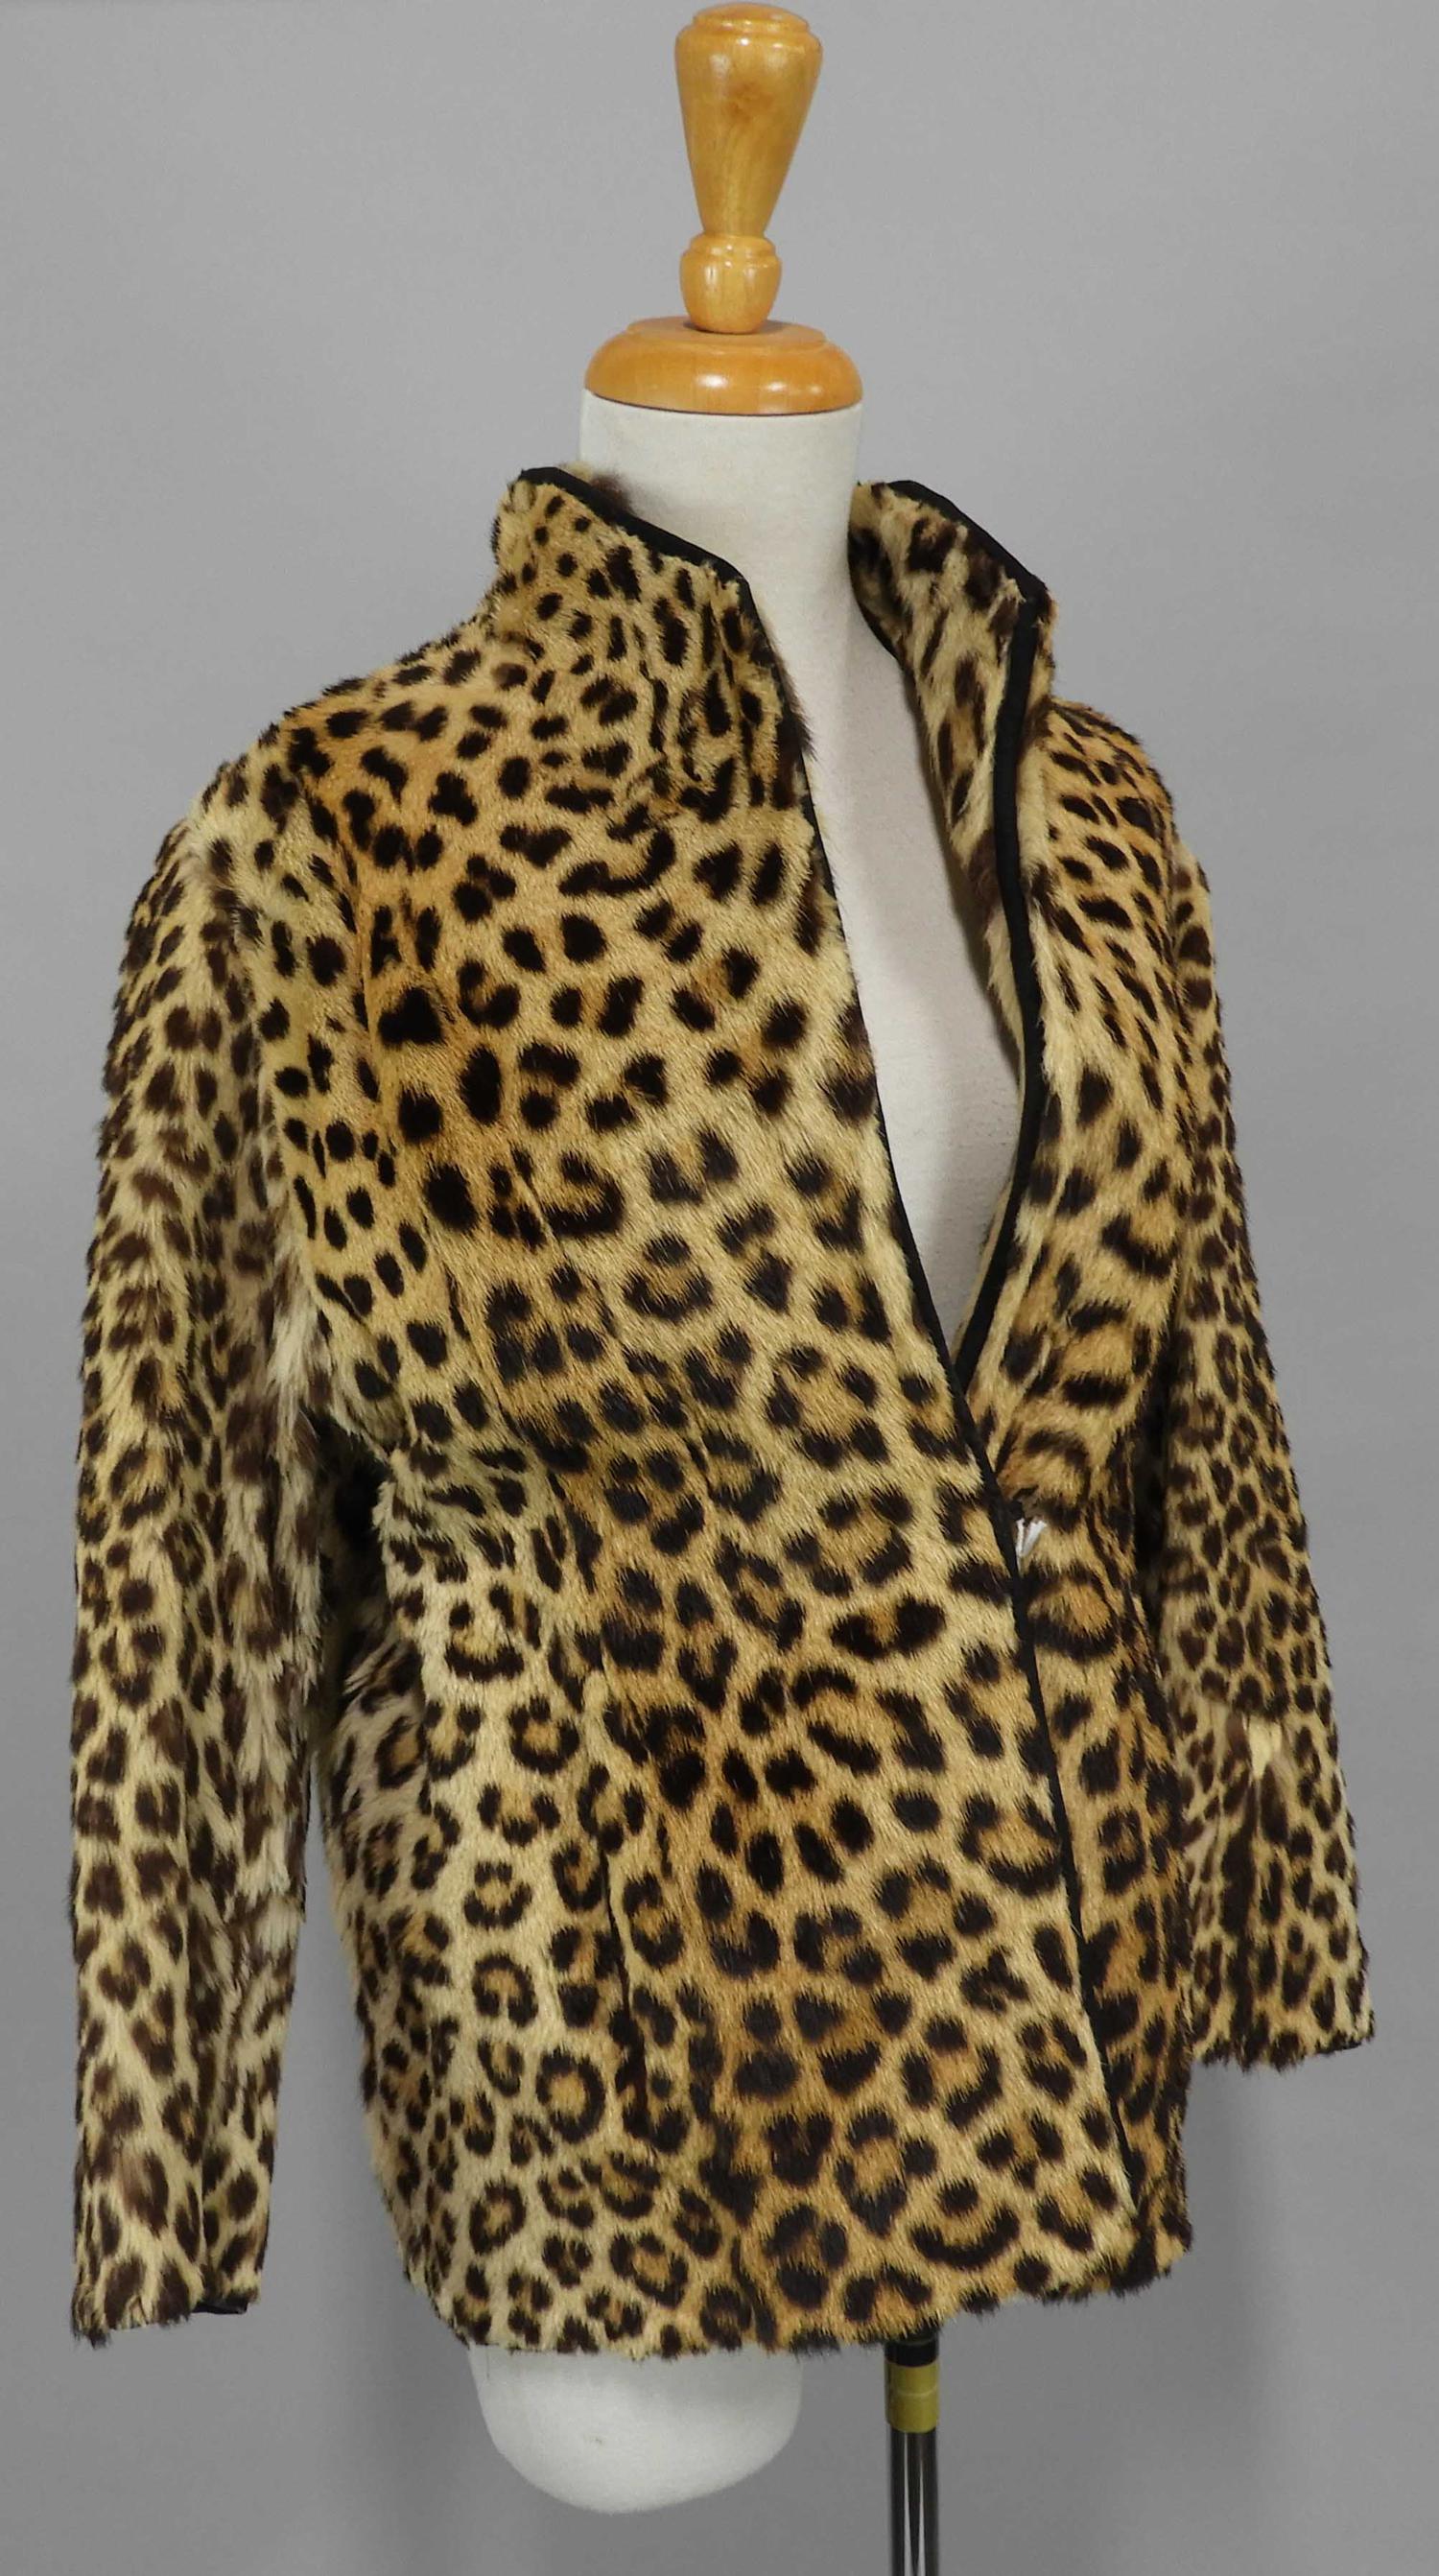 Murrays Auctioneers - Lot 68K: Vintage leopard fur jacket